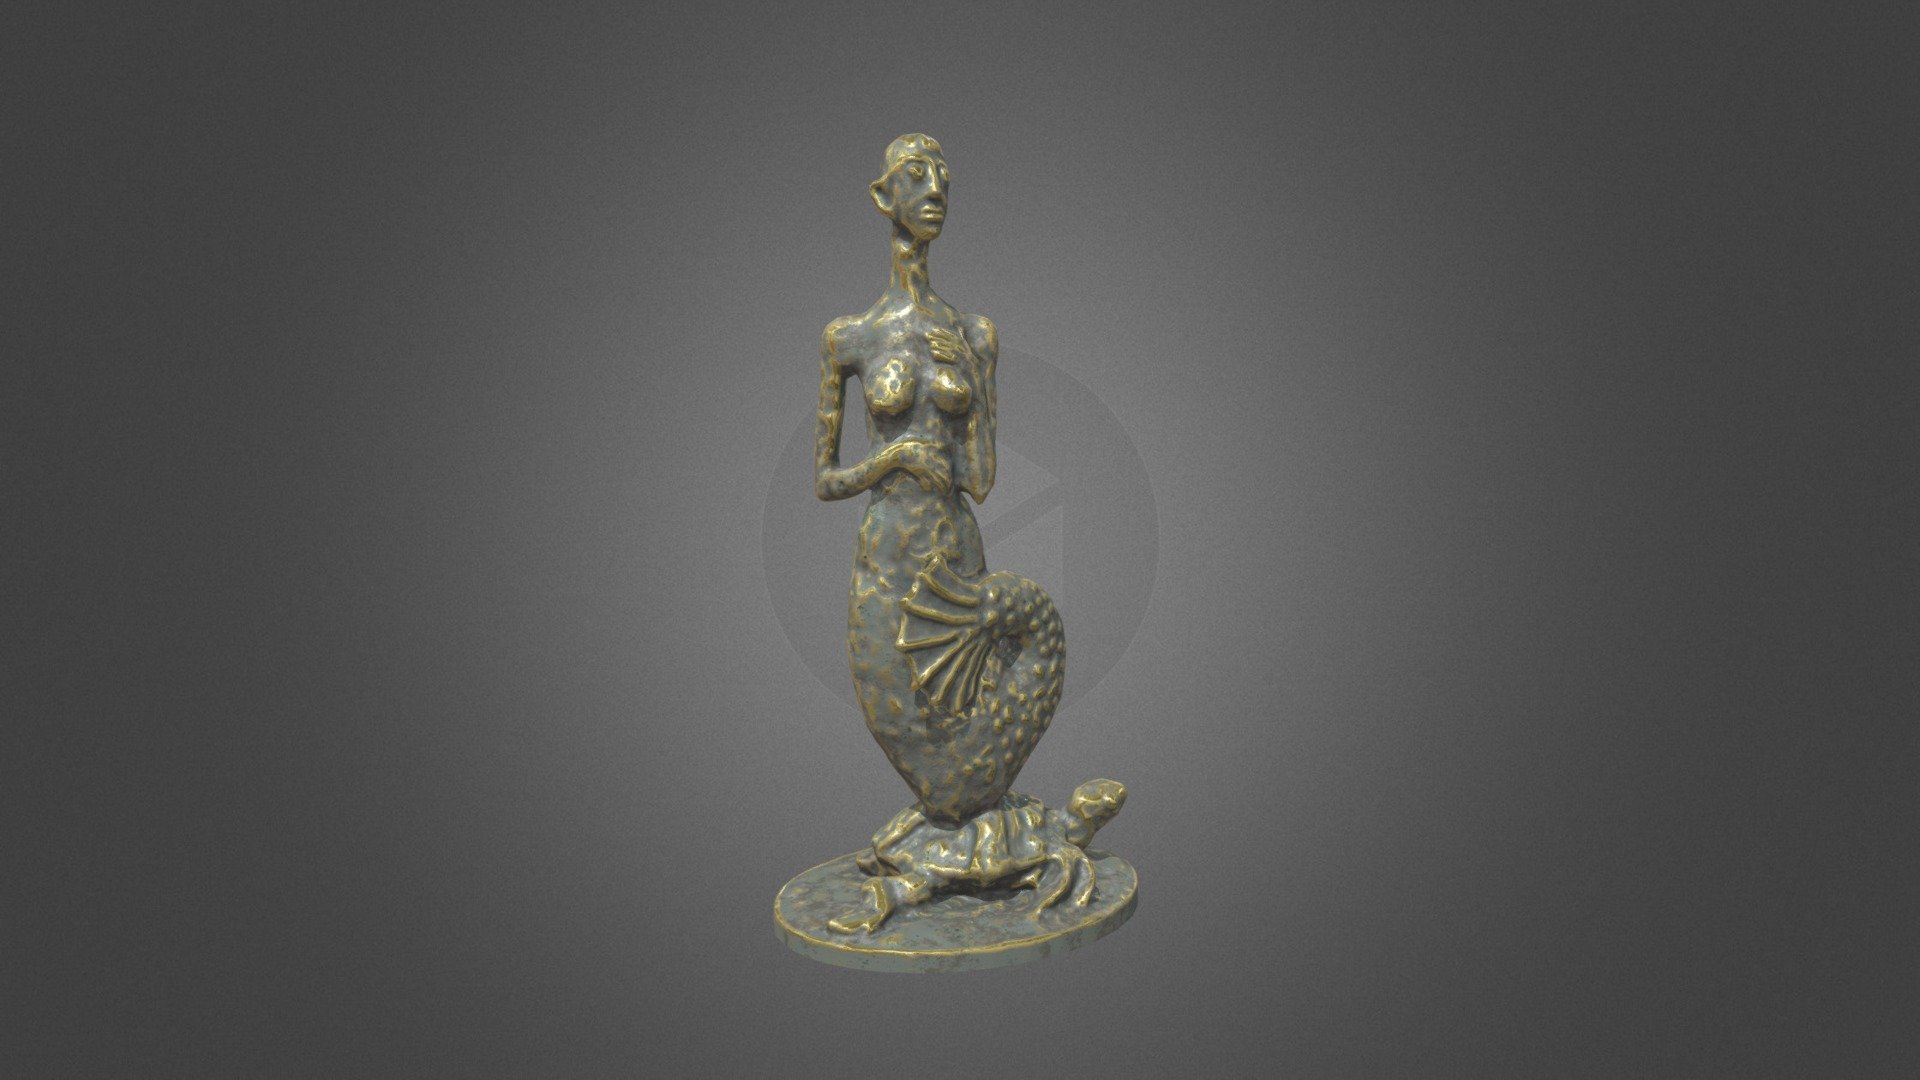 Mermaid statuette